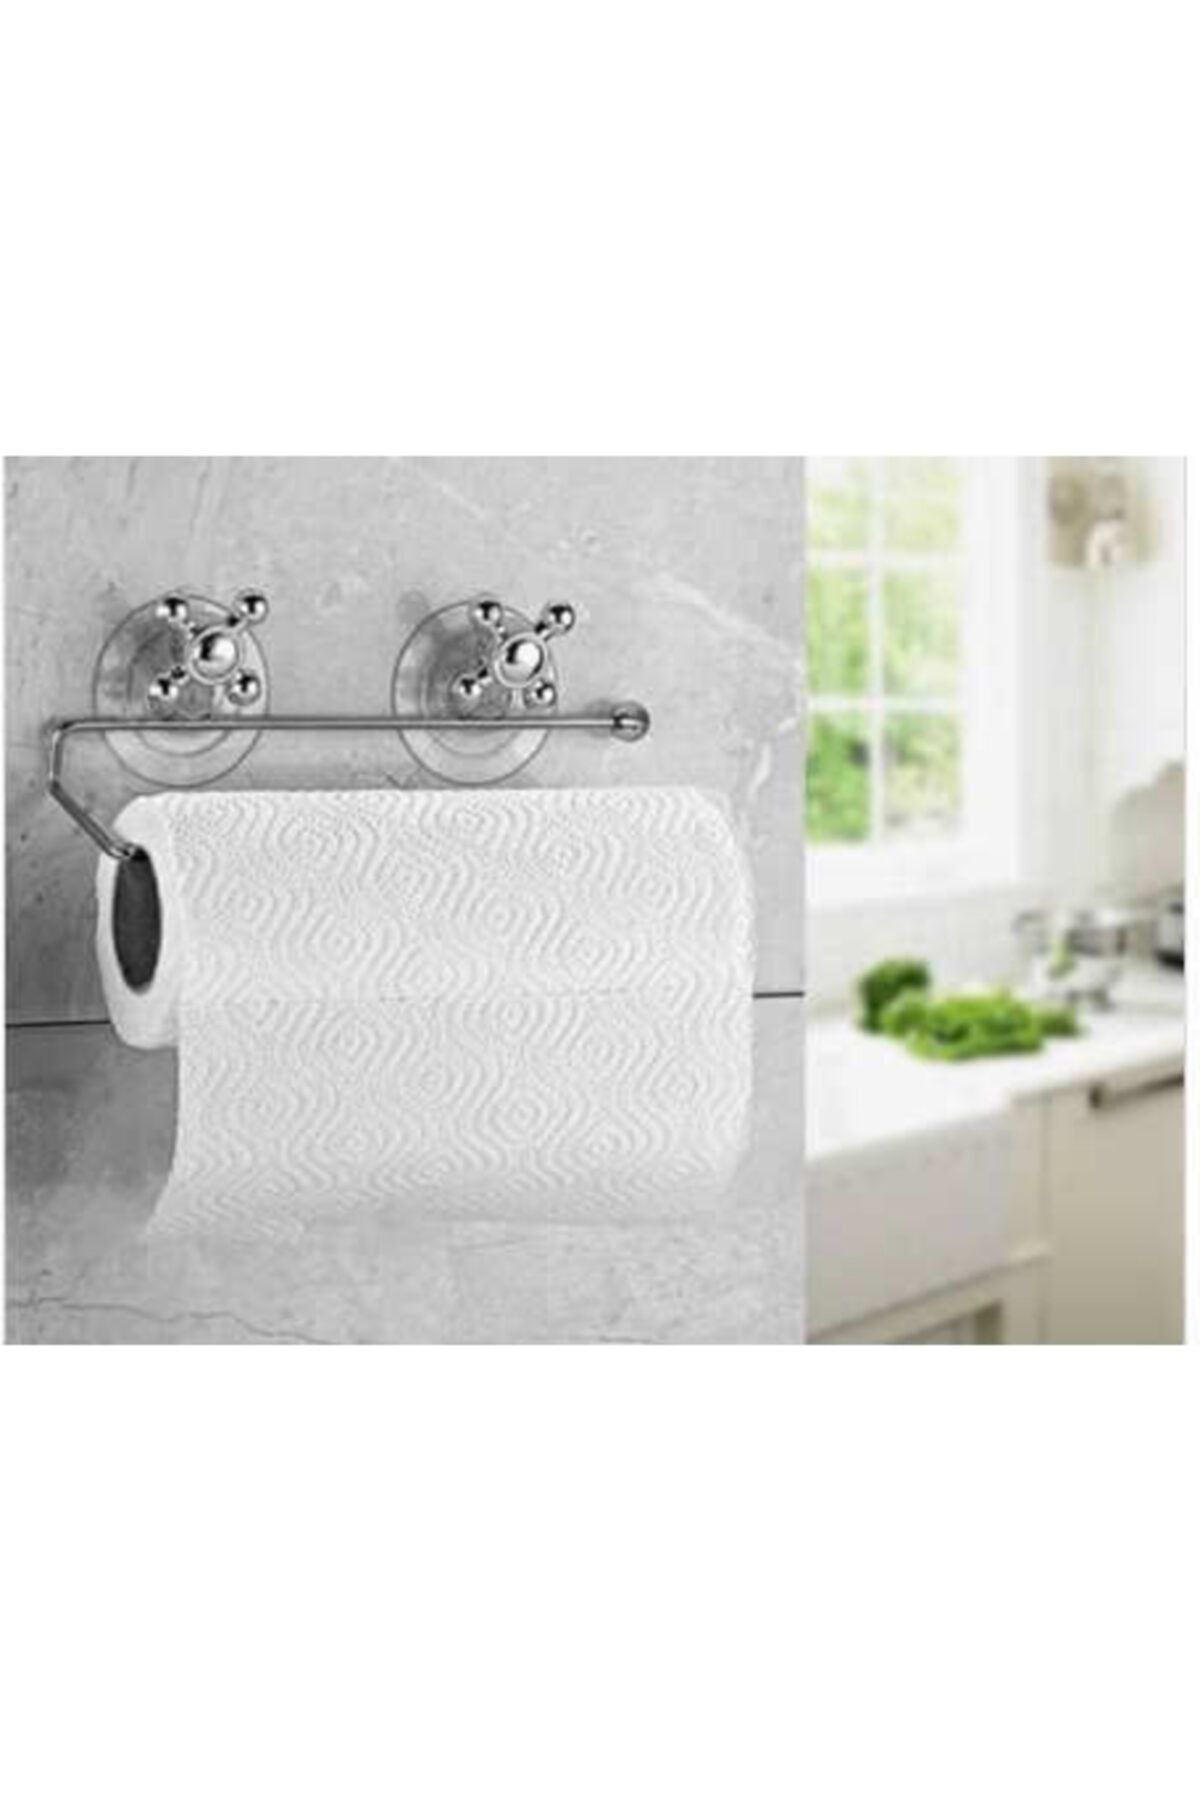 morponi Vakumlu Havluluk Tutucu Banyo Tuvalet Kağıt Havlu Askısı